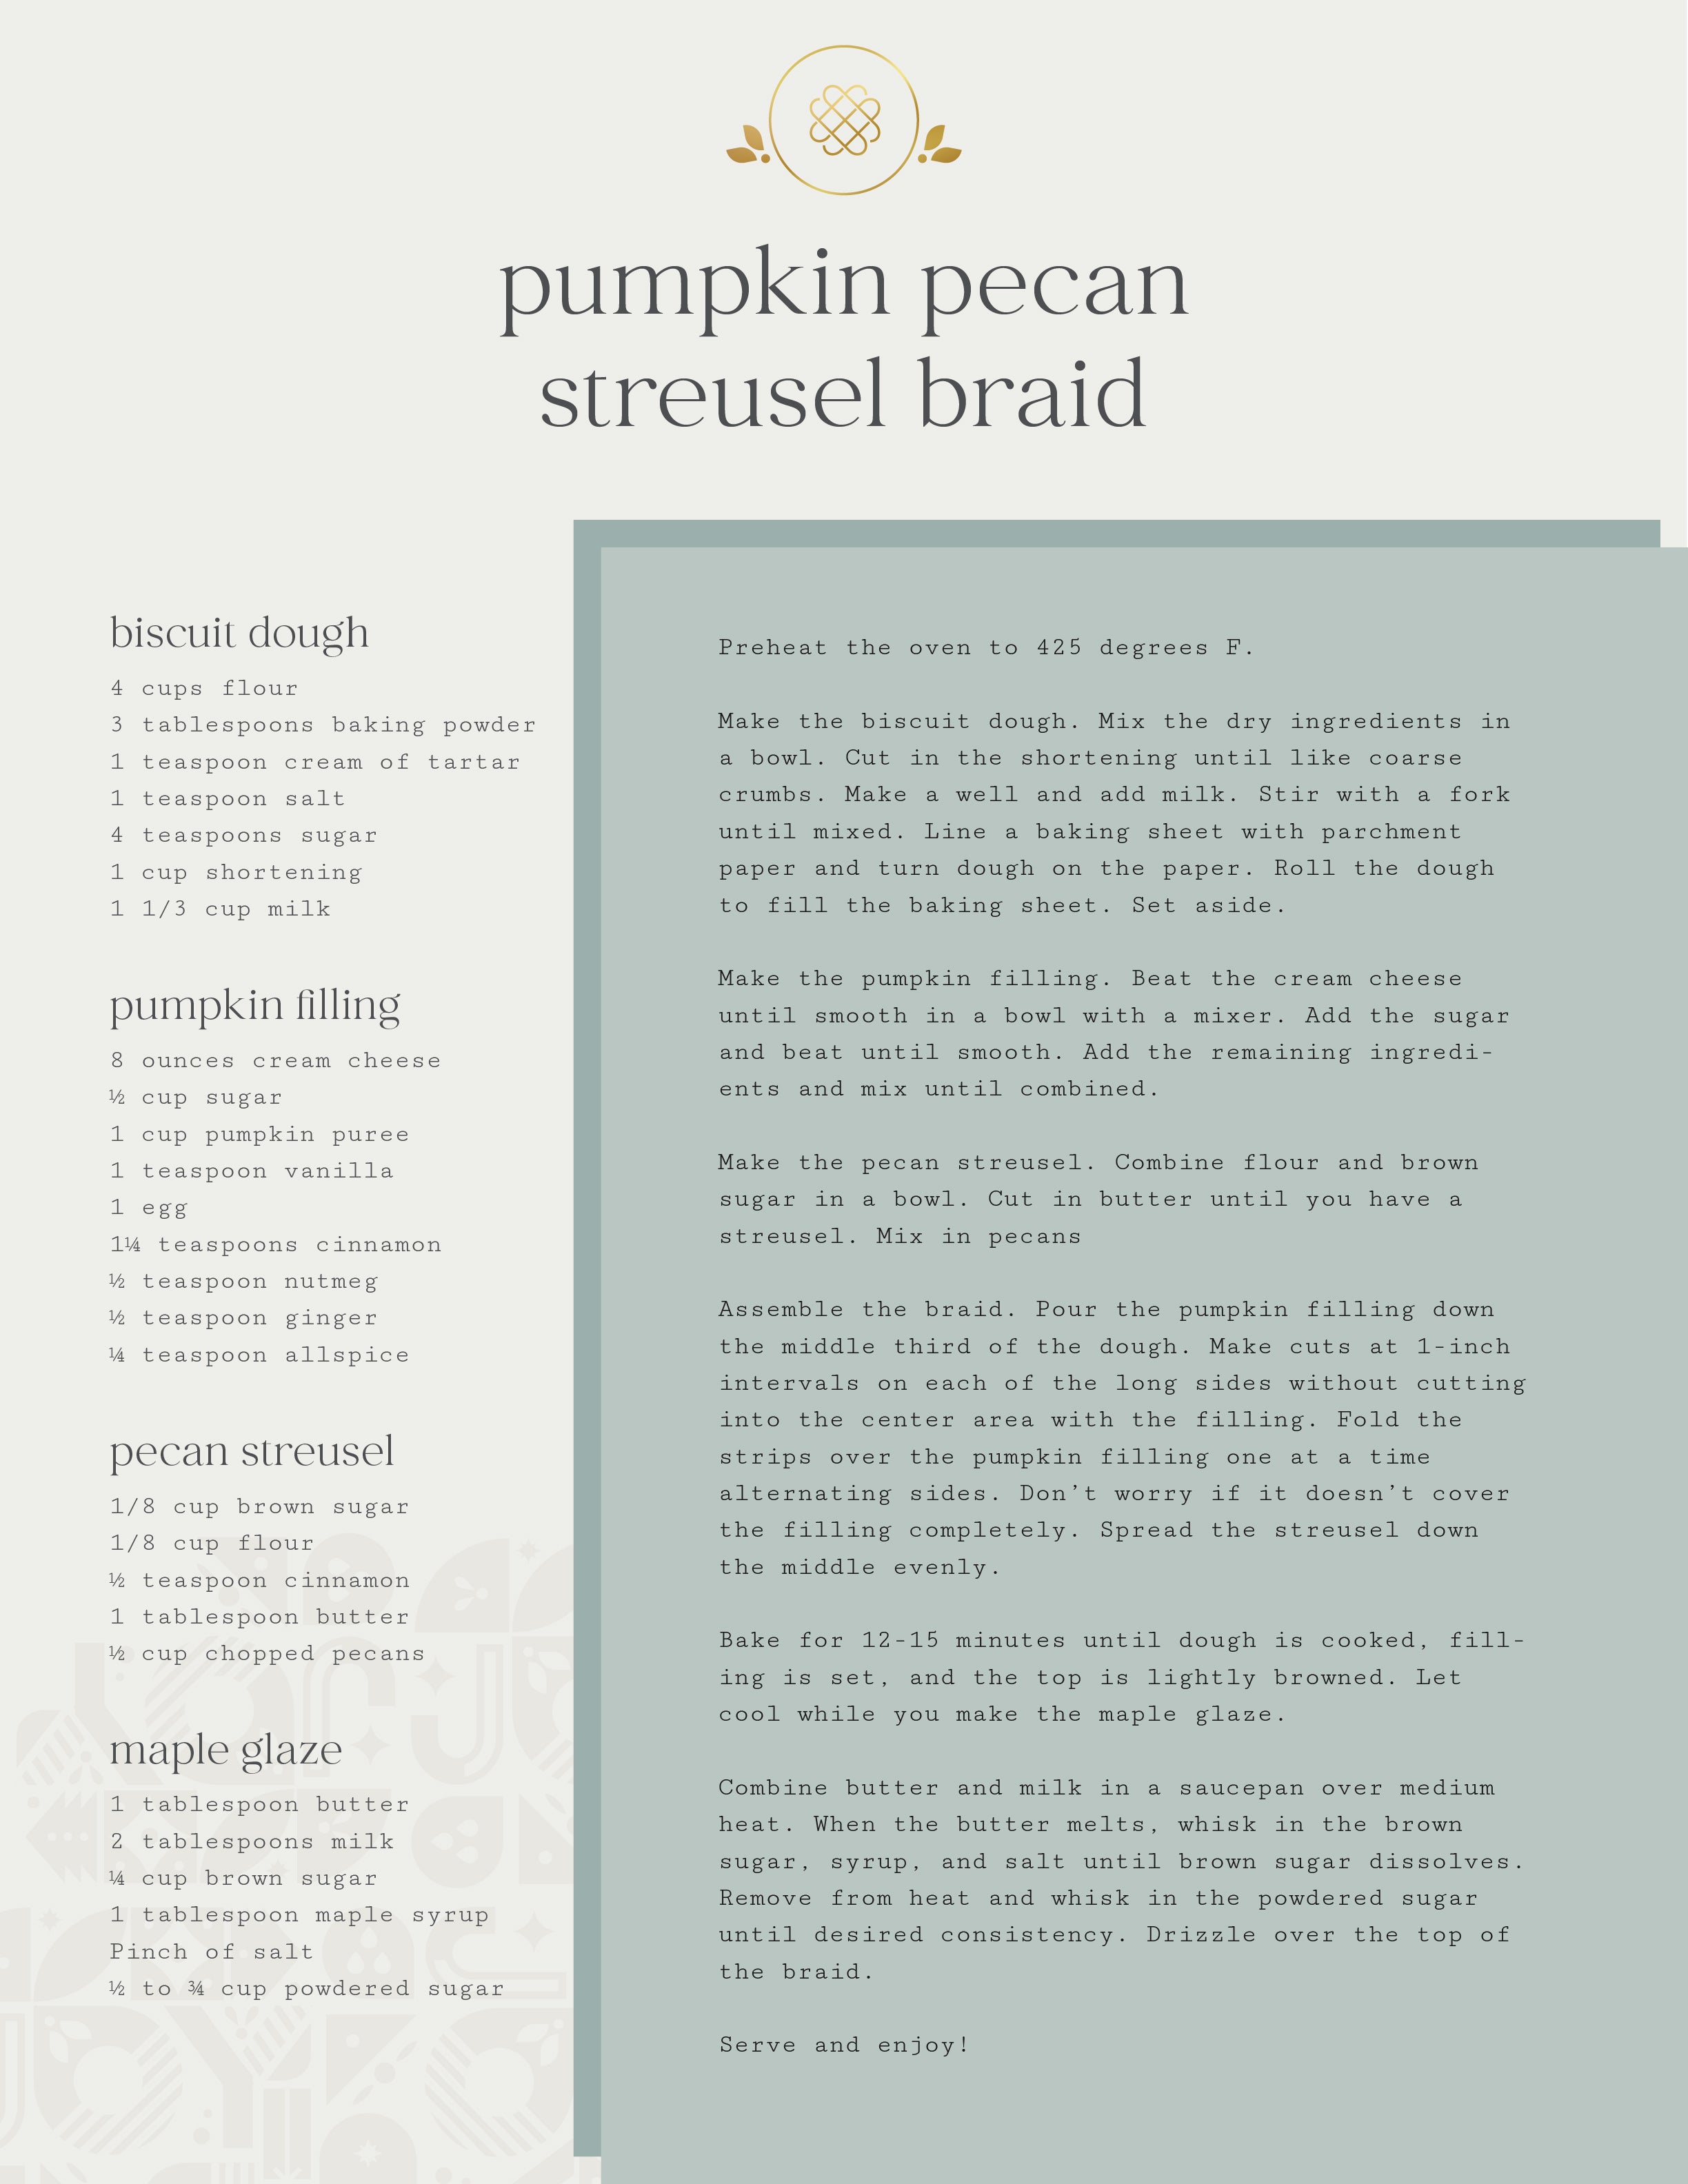 pumpkin Pecan Streusel Braid